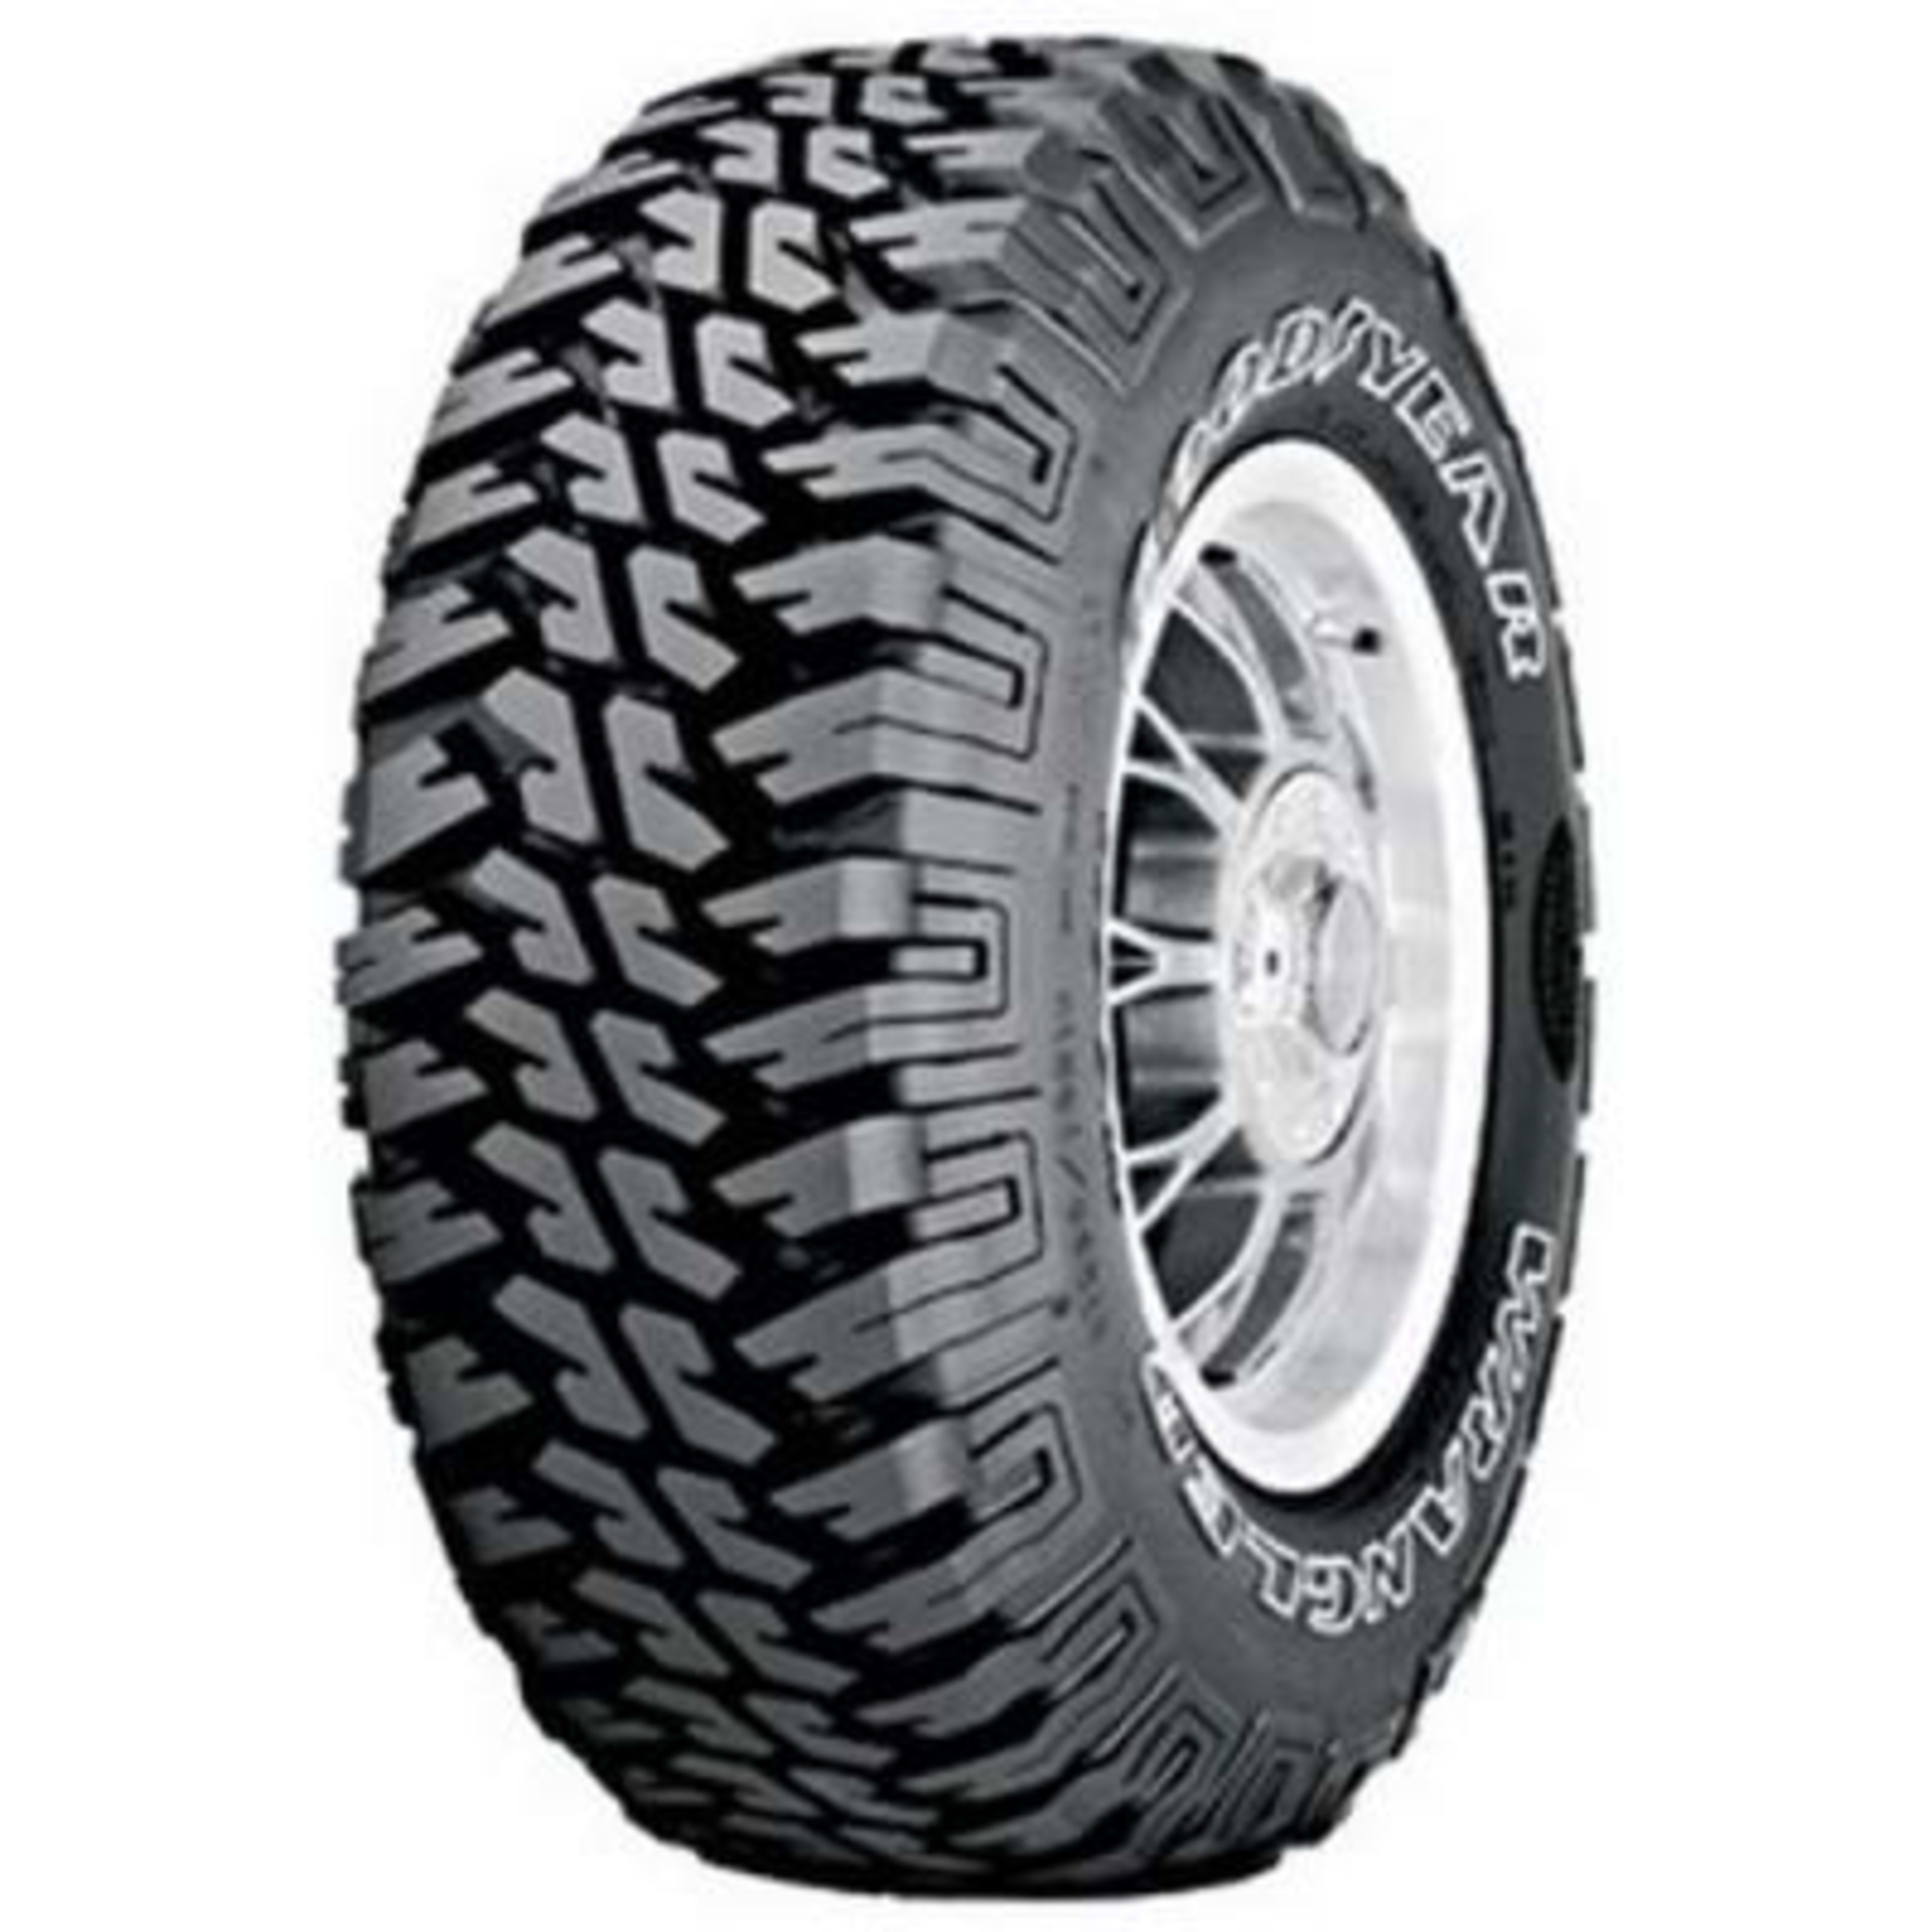 Buy Goodyear Military Wrangler MTR Tires Online | SimpleTire